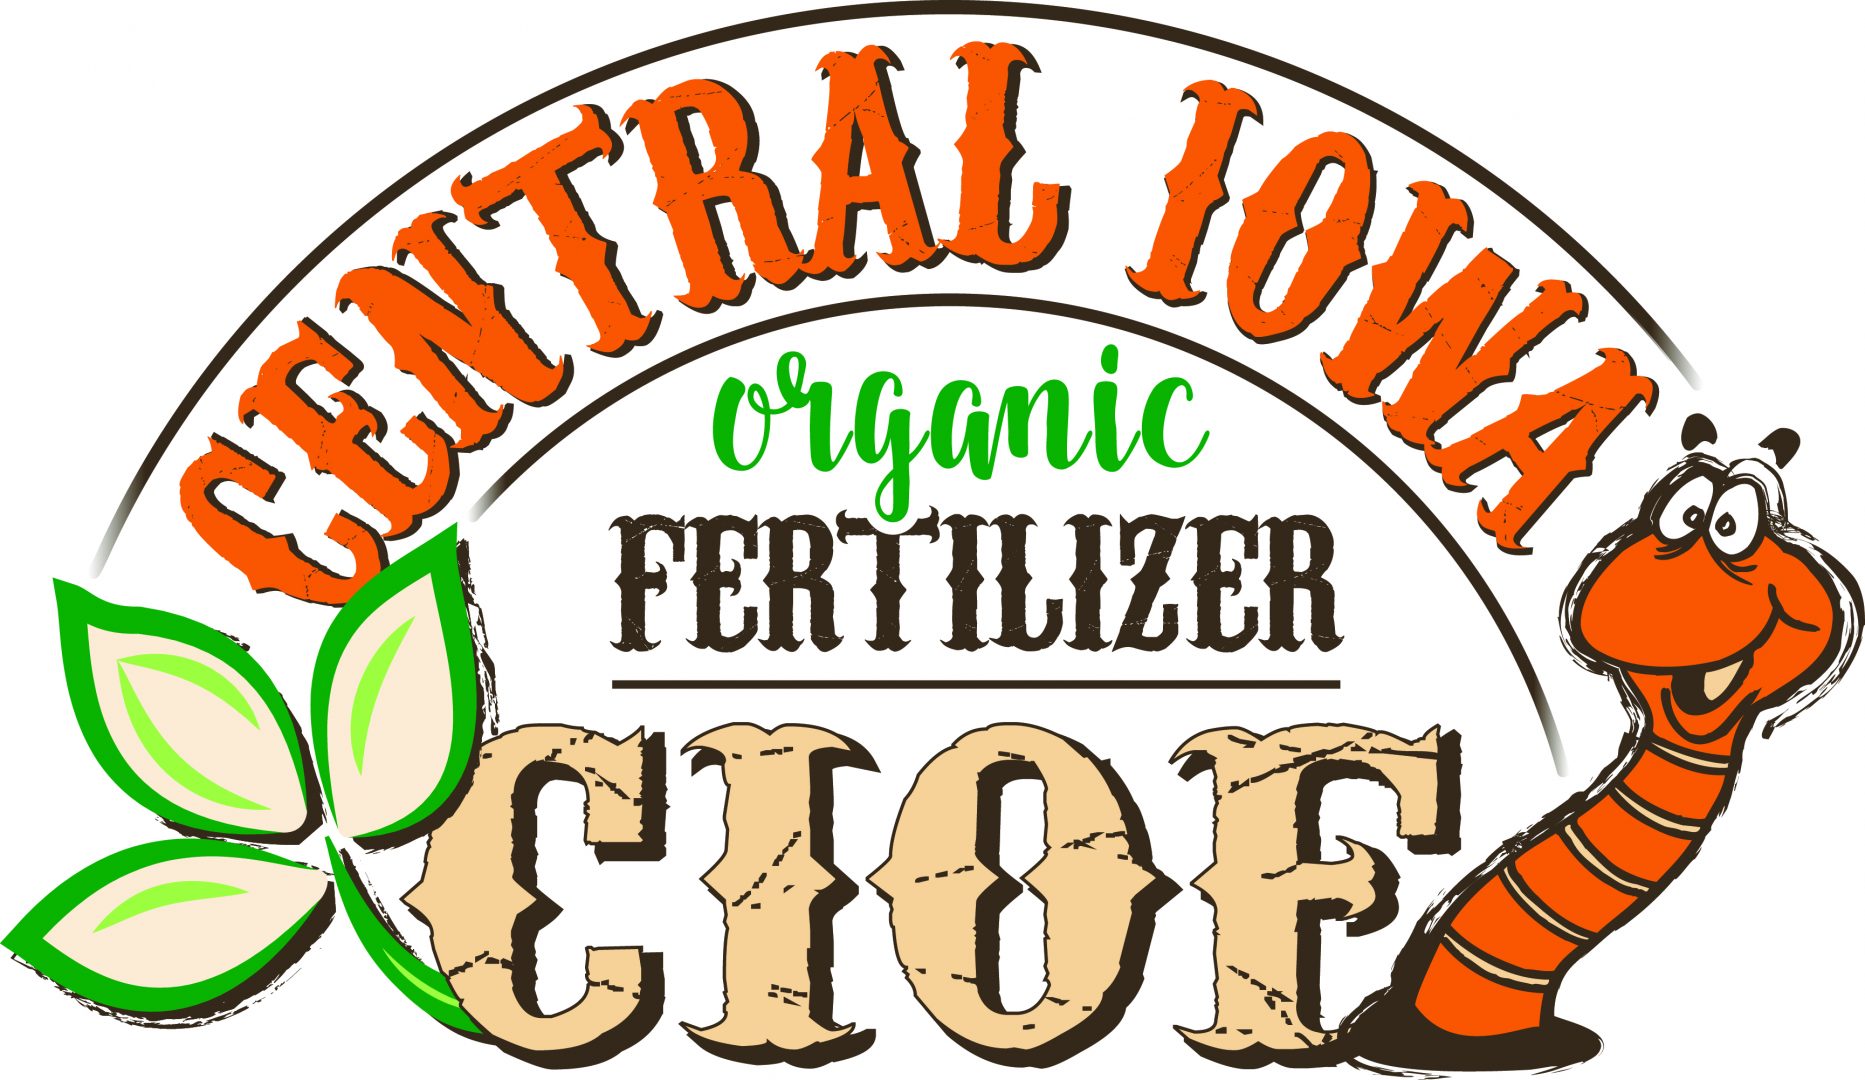 Central Iowa Organic Fertilizer